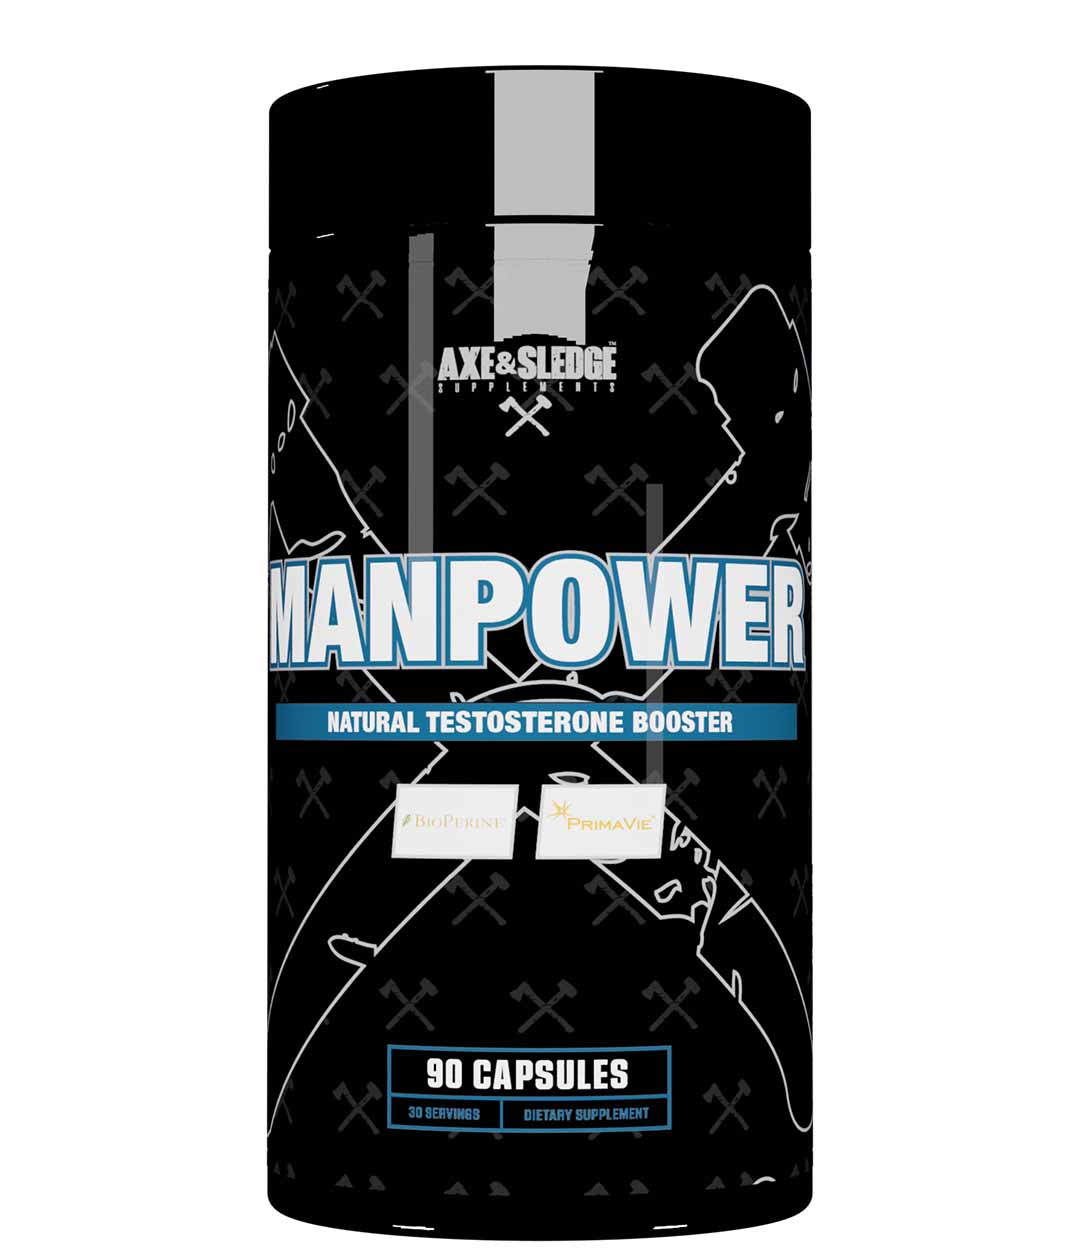 MANPOWER // Natural Testosterone Booster